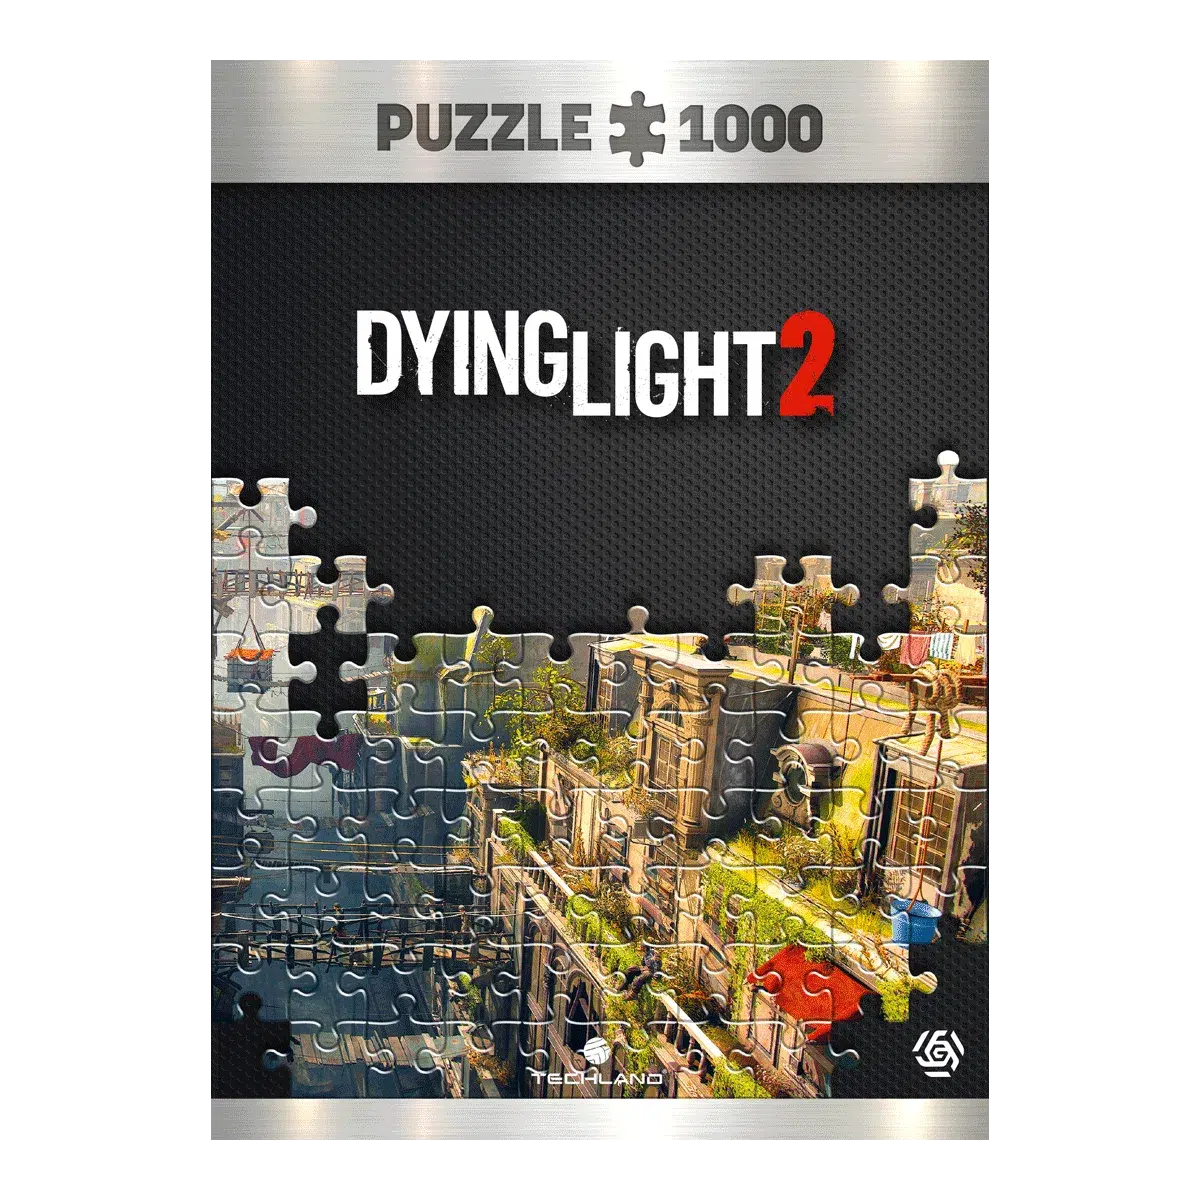 Dying Light 2 Puzzle "City" (1000 pcs)